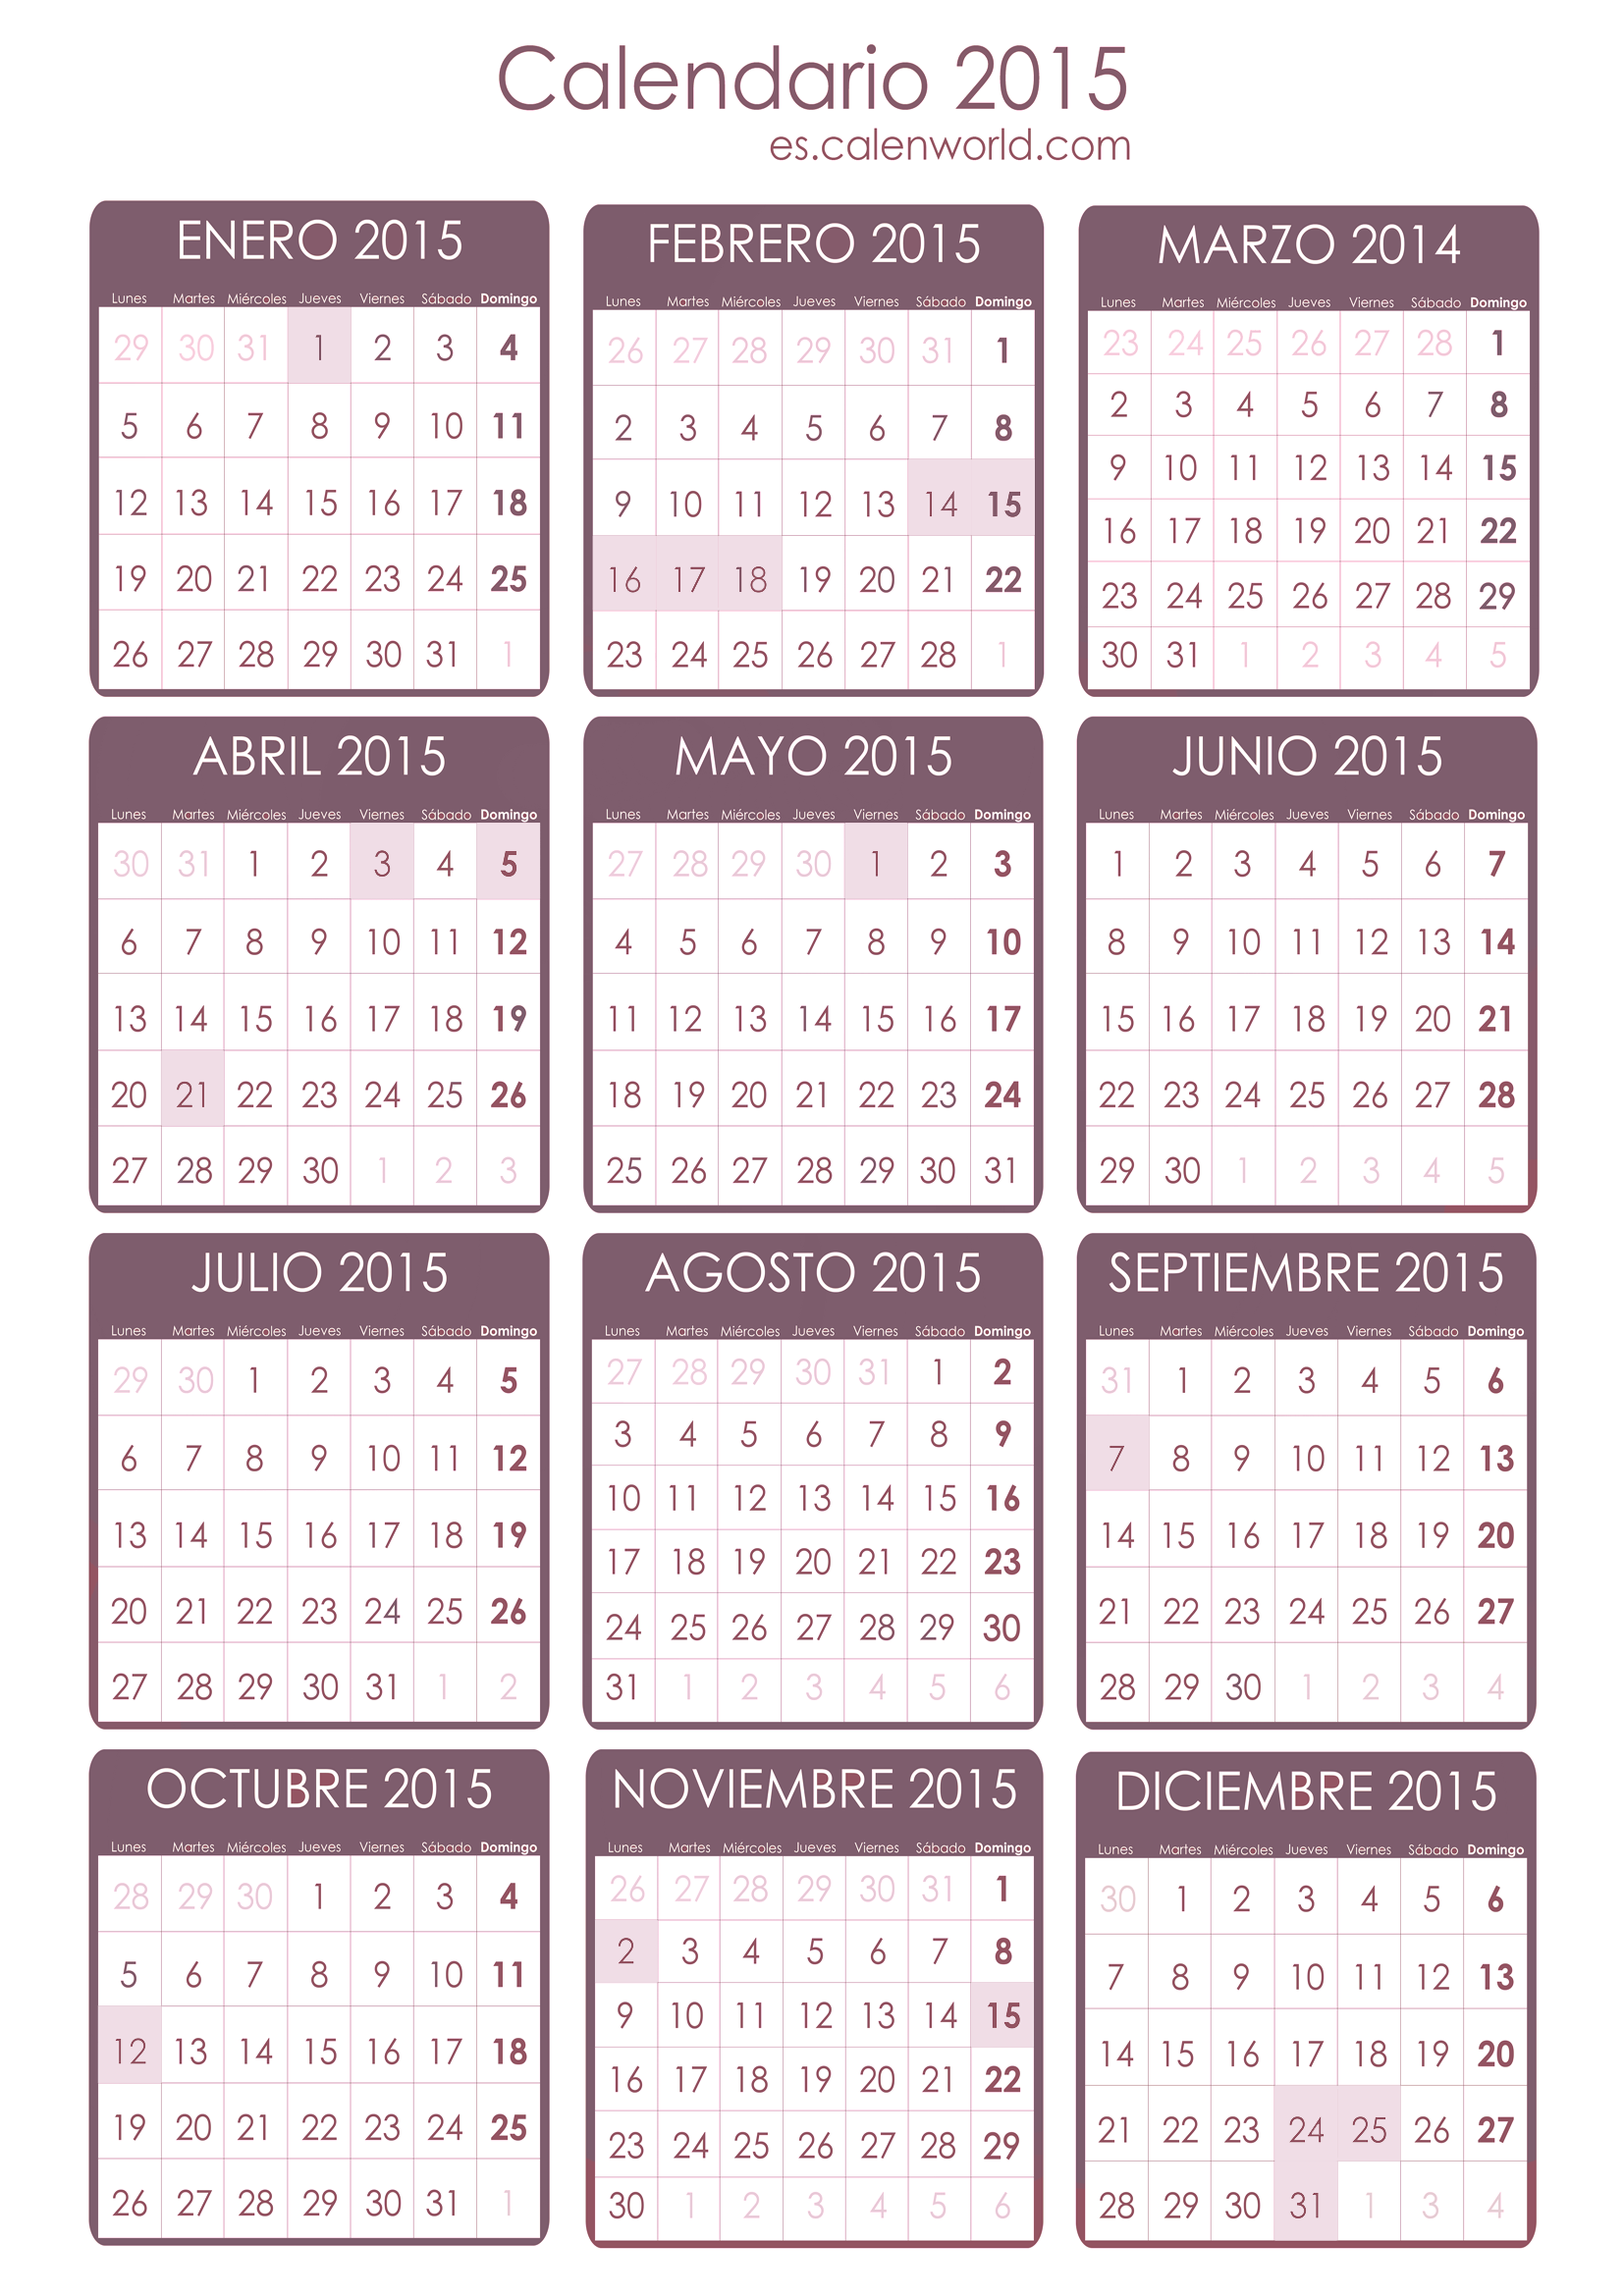 Calendario feriados brasil 2015